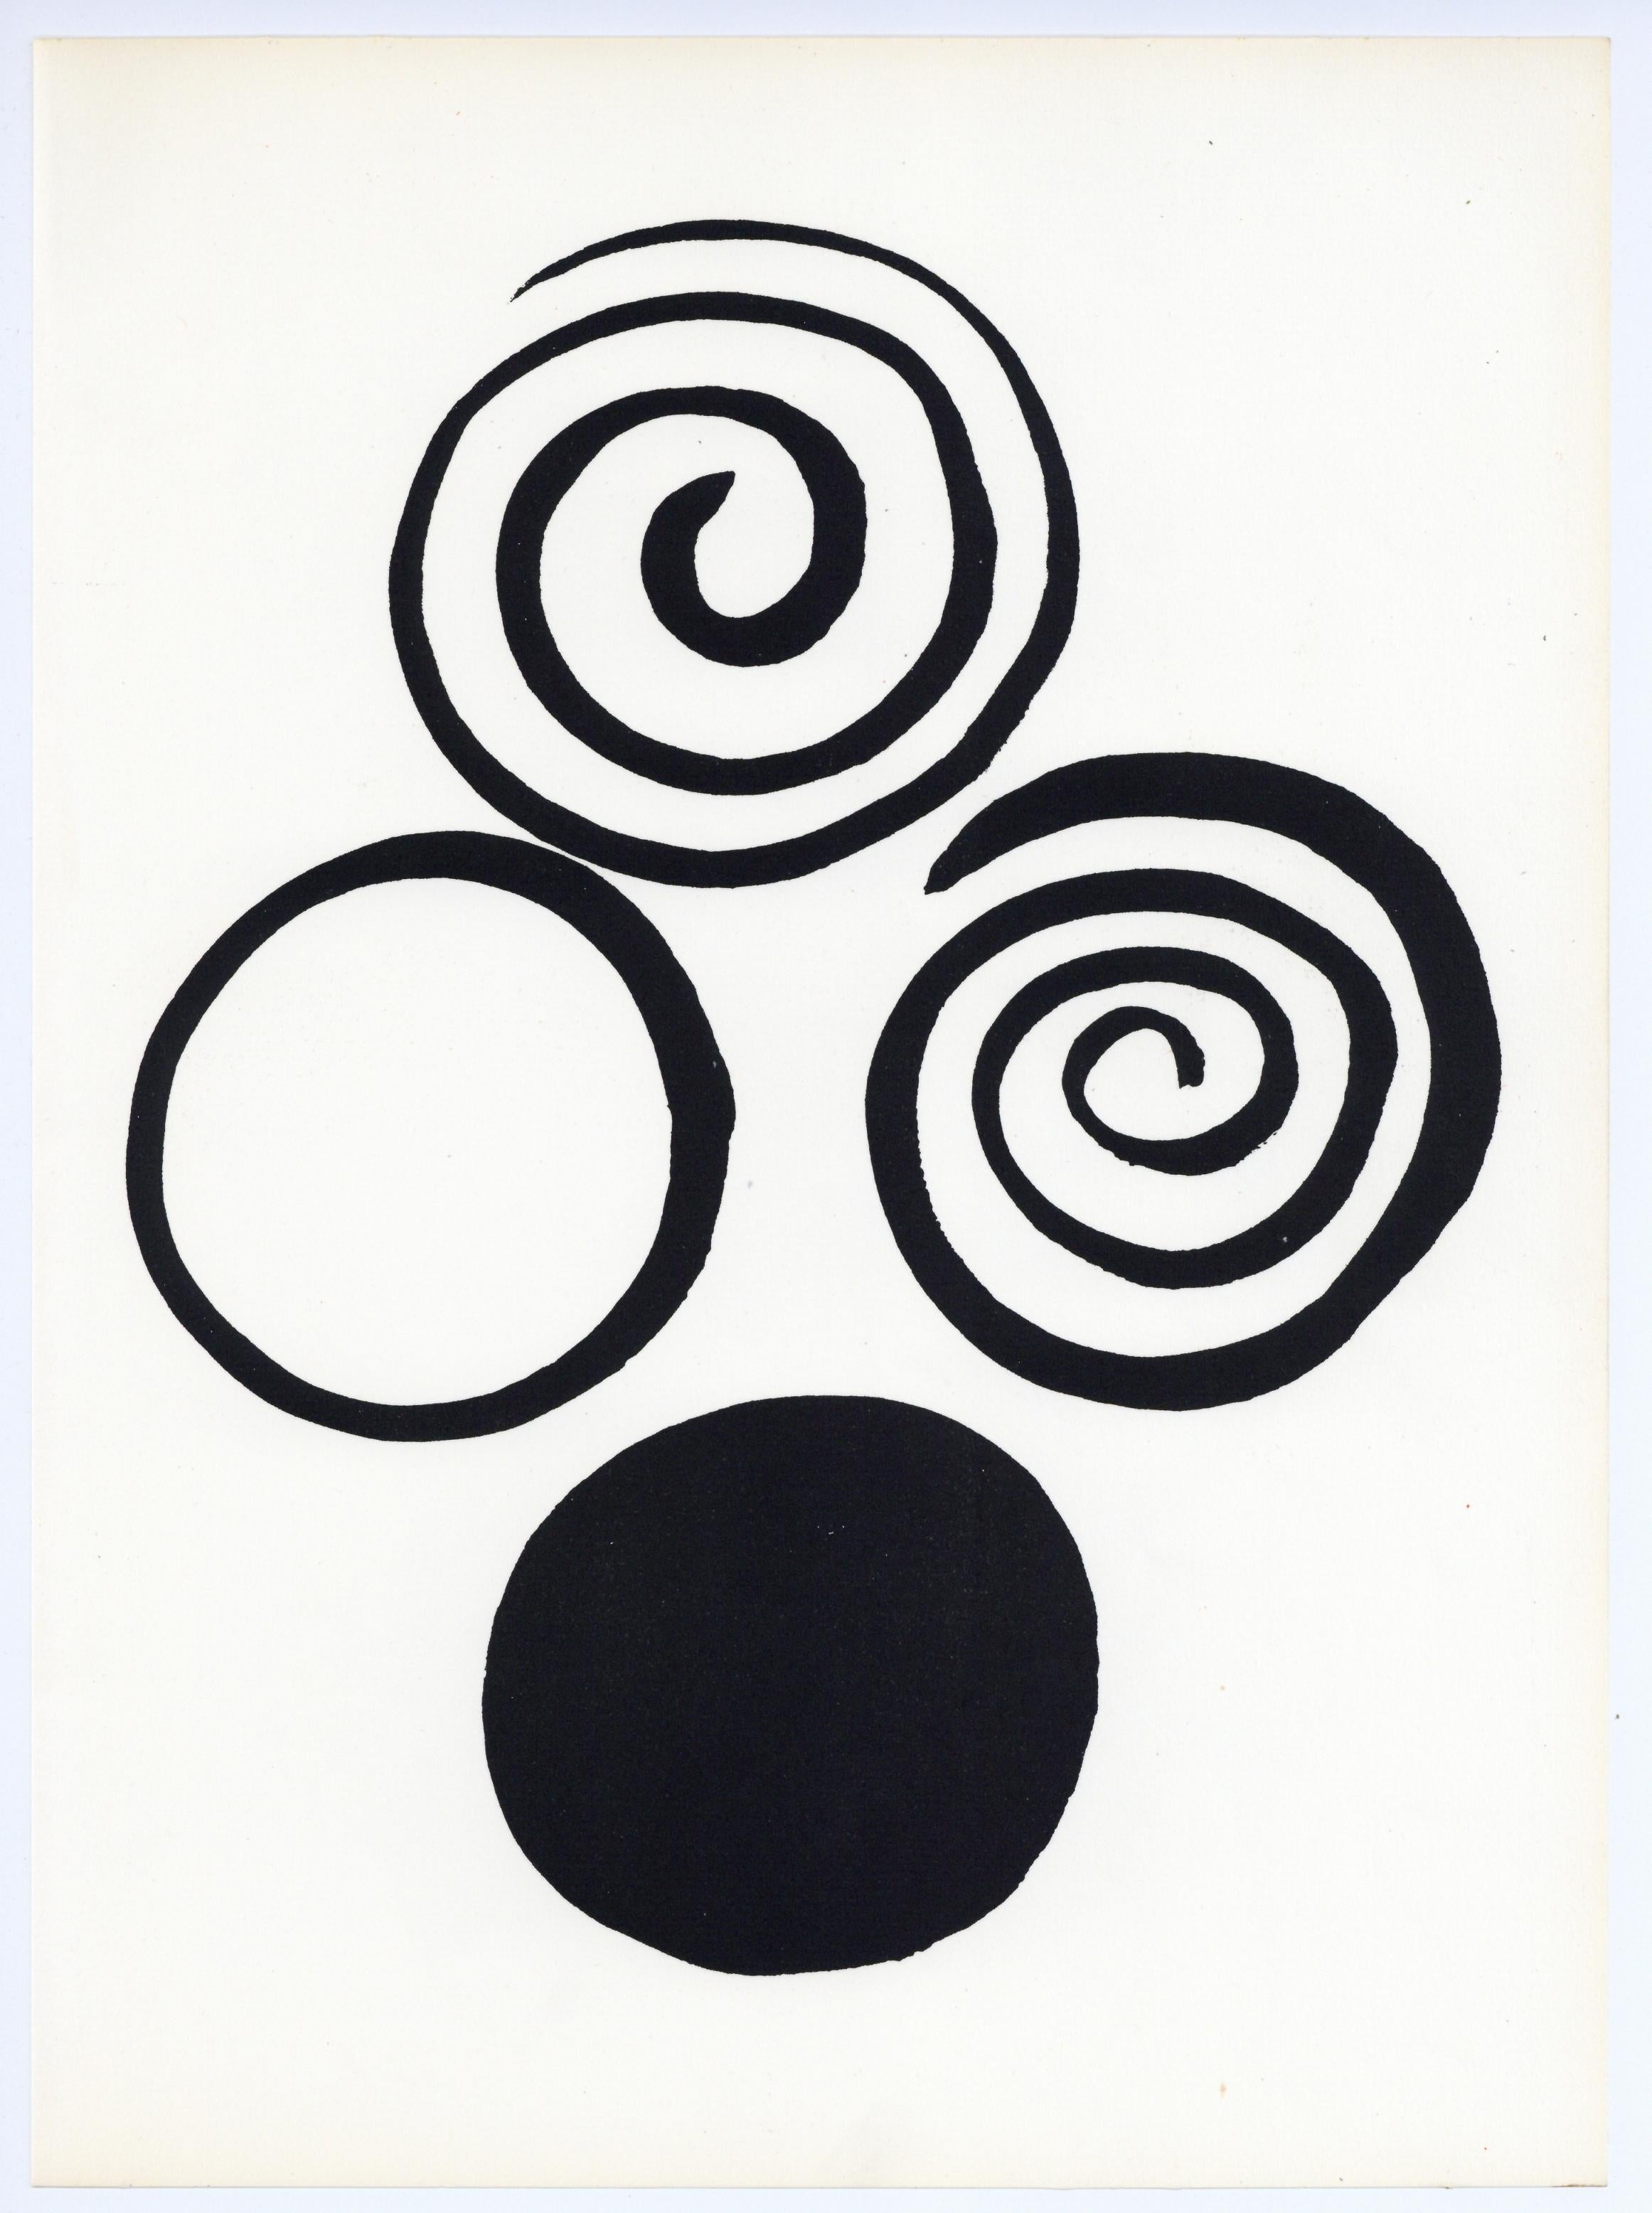 lithograph - Print by (after) Alexander Calder